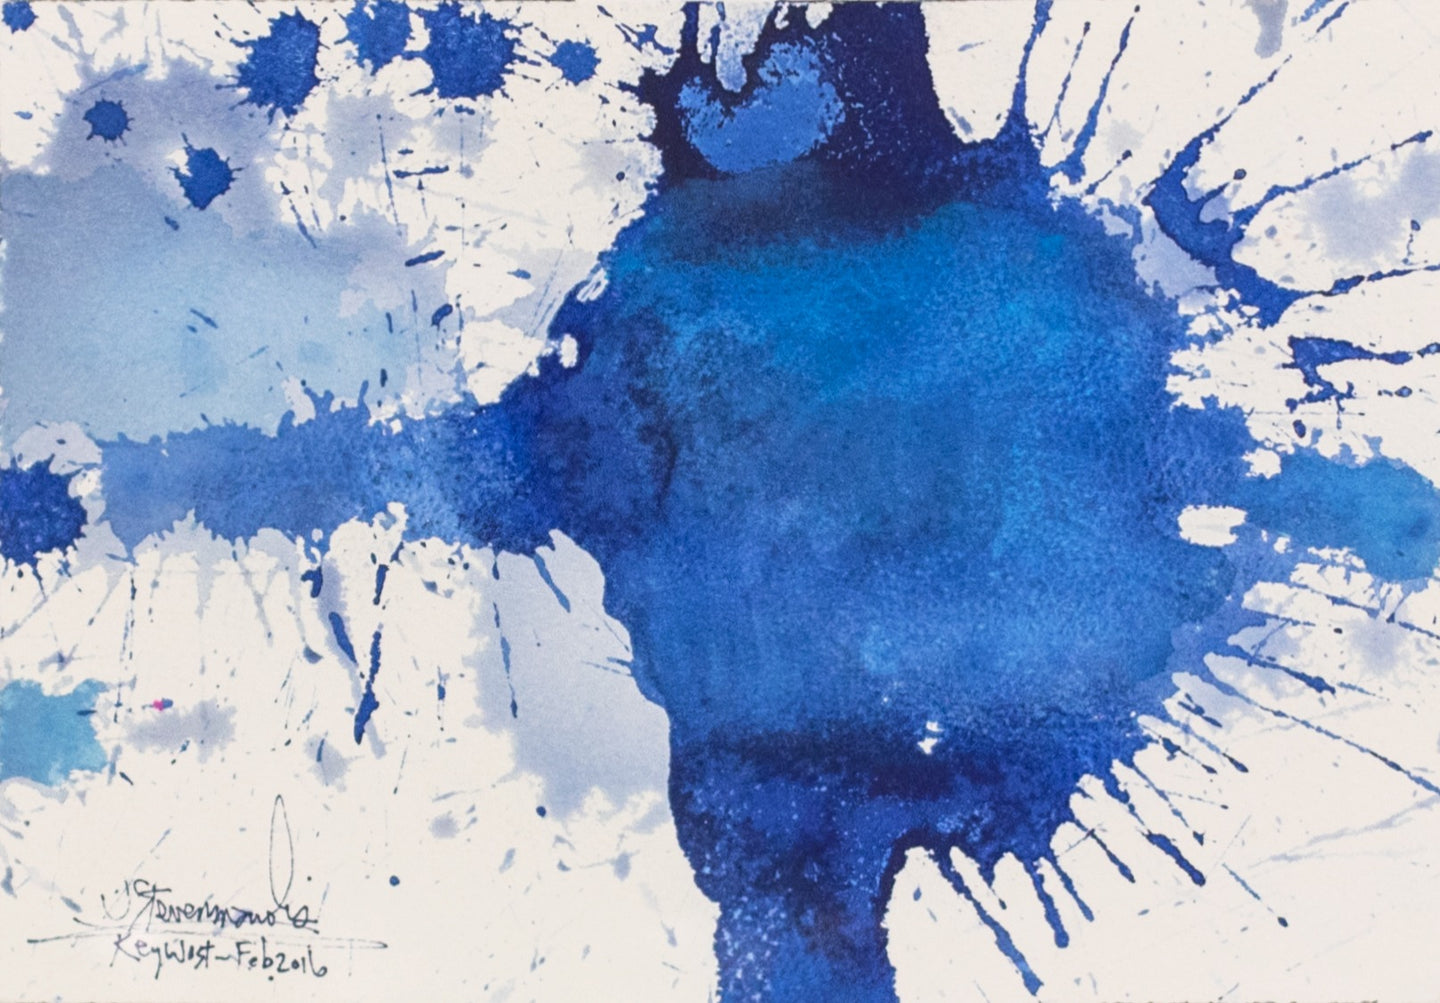 J. Steven Manolis, Splash (Key West) 07.10.01, 2016, Watercolor painting paper, 7 x 10 inches, Blue Abstract Art, Splash Art for sale at Manolis Projects Art Gallery, Miami, Fl